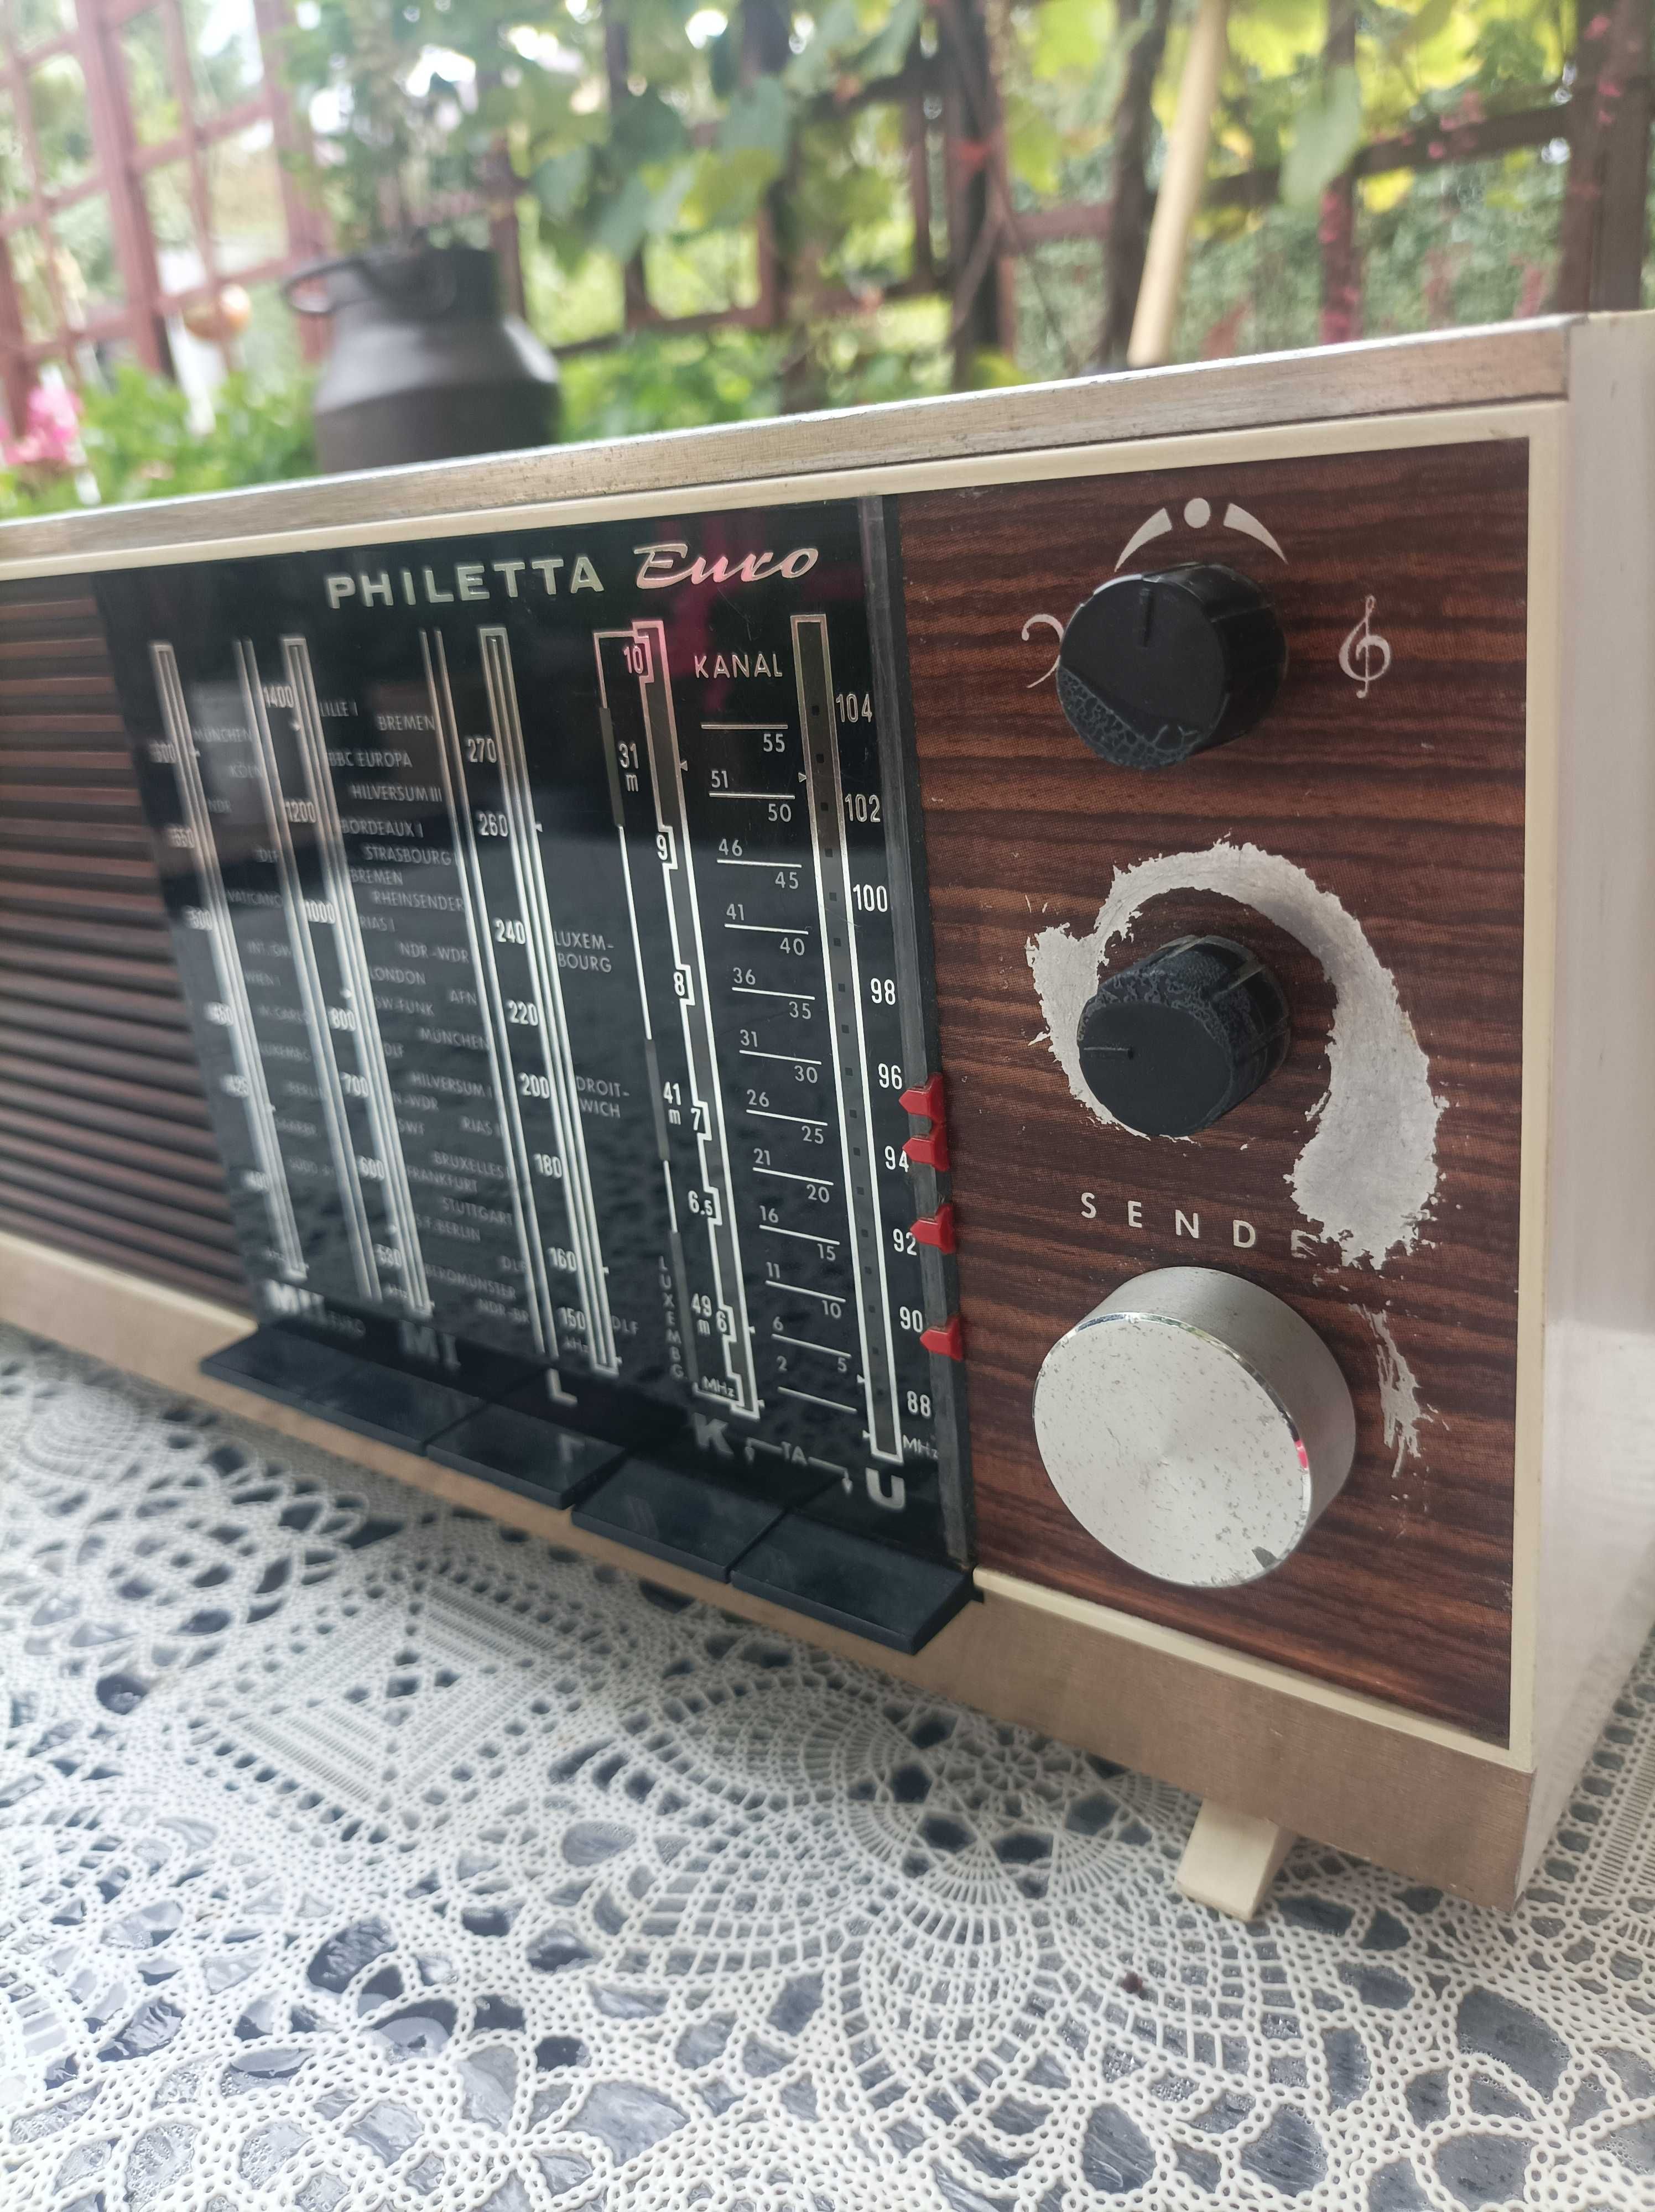 Philips Philetta 280 radio retro vintage